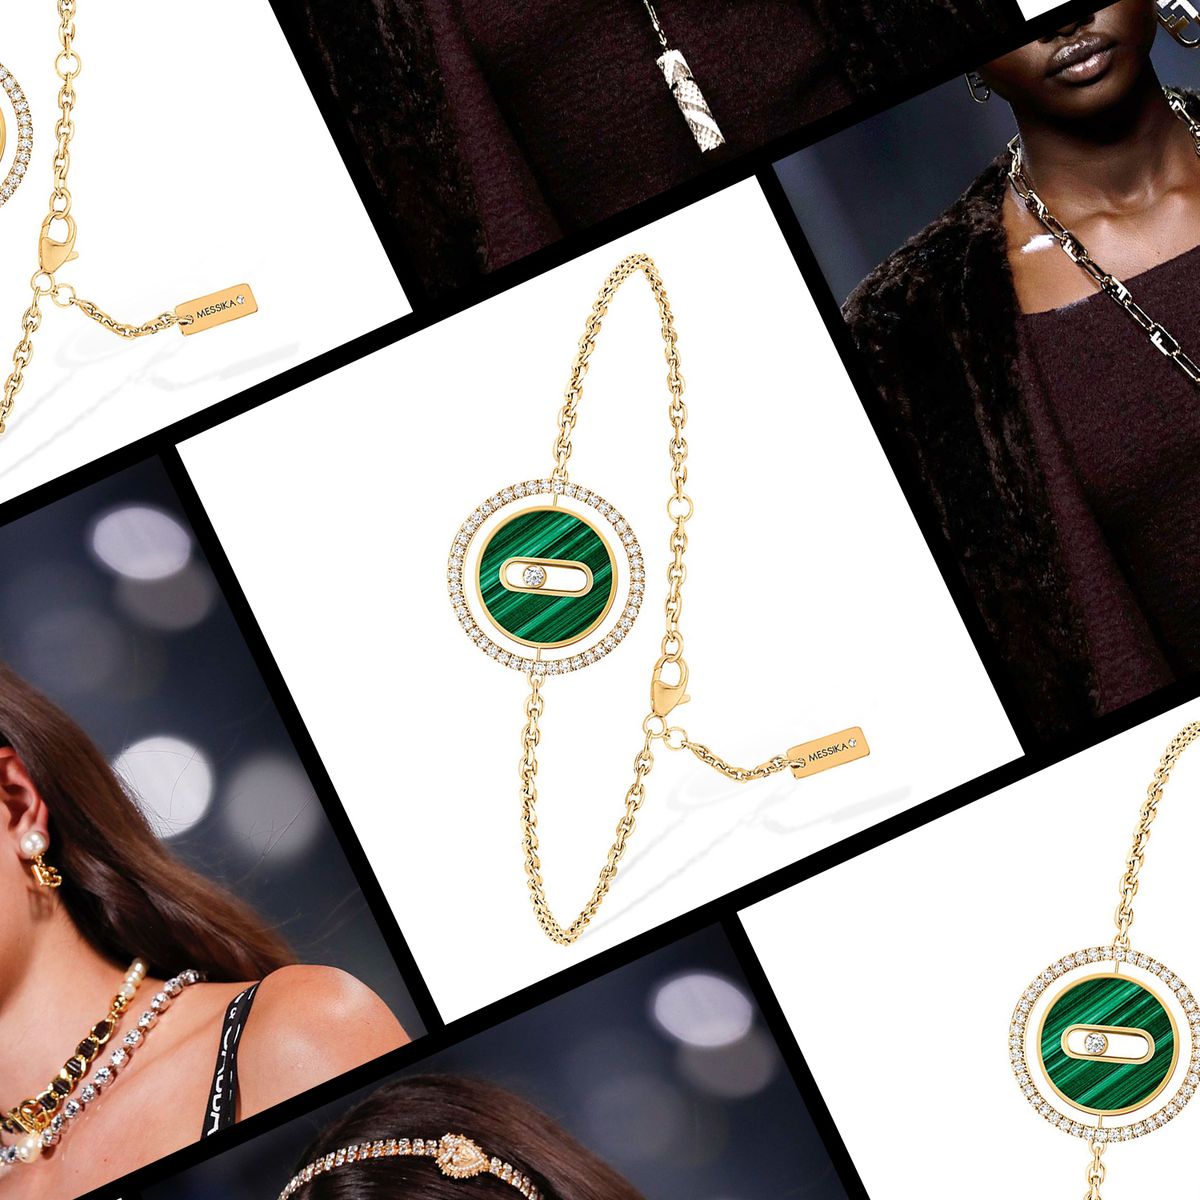 2023 Jewellery Trends: Modernizing Classic Diamond Styles